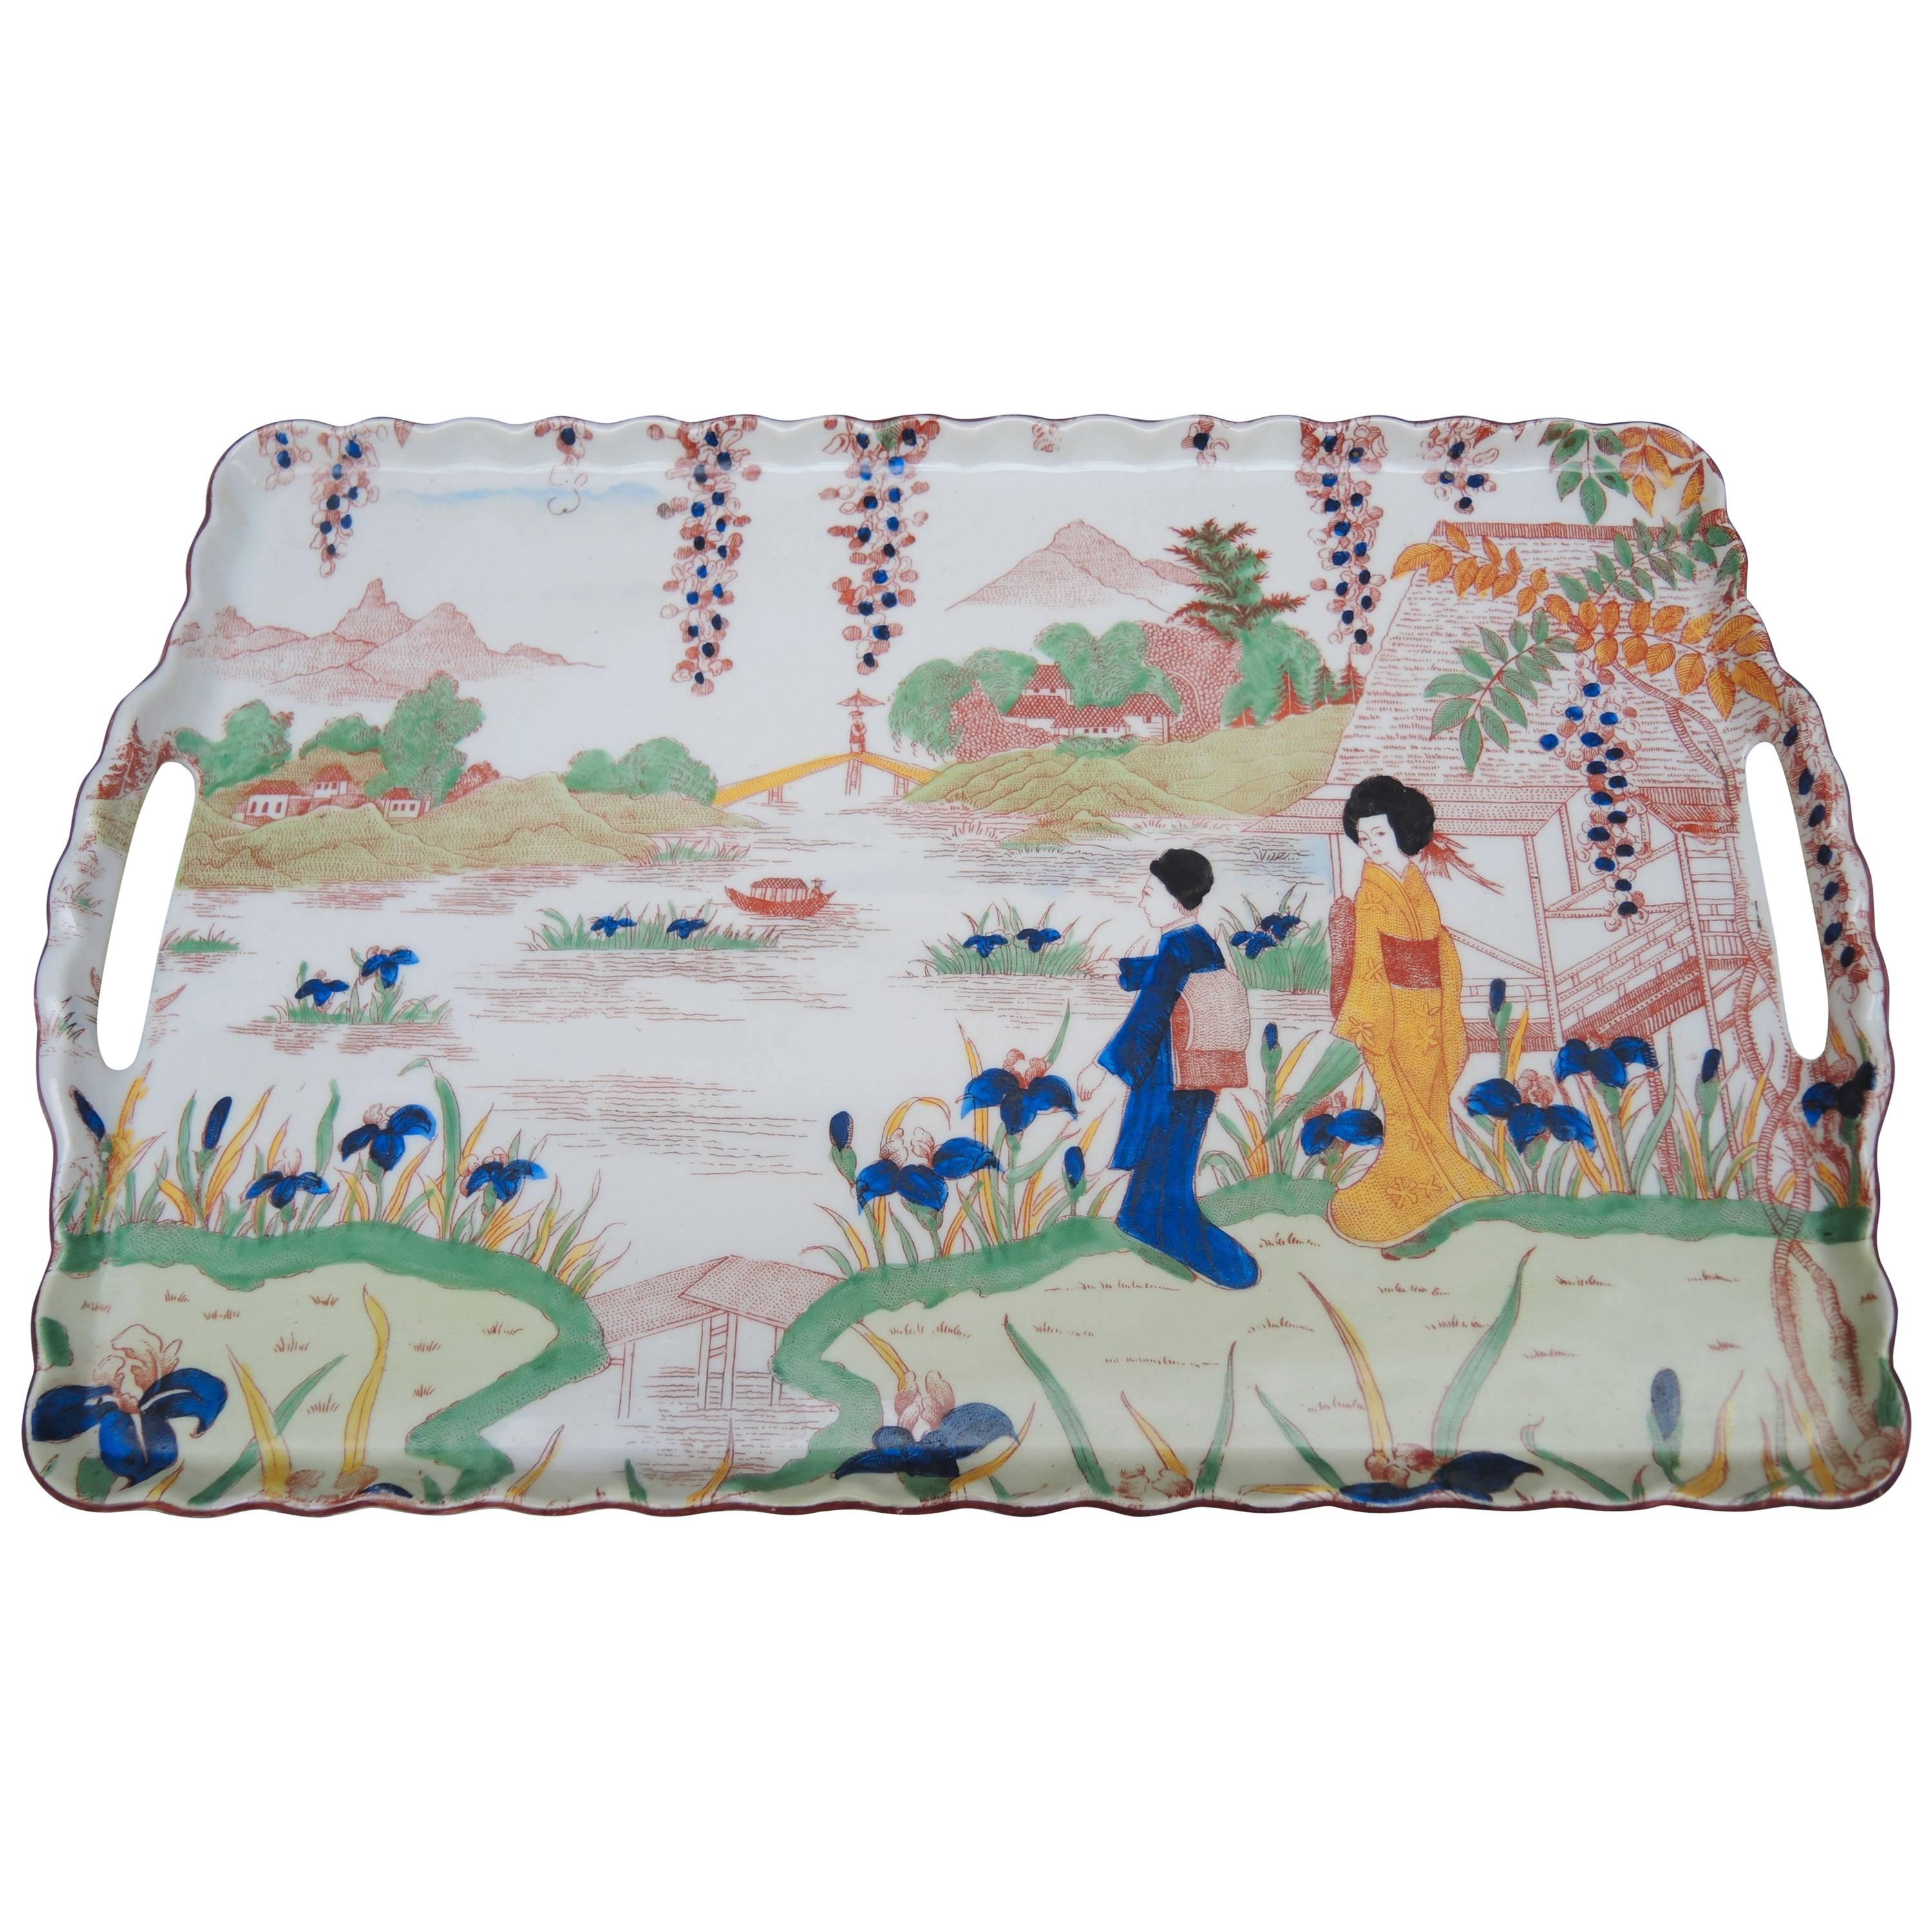 Vintage European Porcelain Tray with Chinoiserie Glazed Decoration